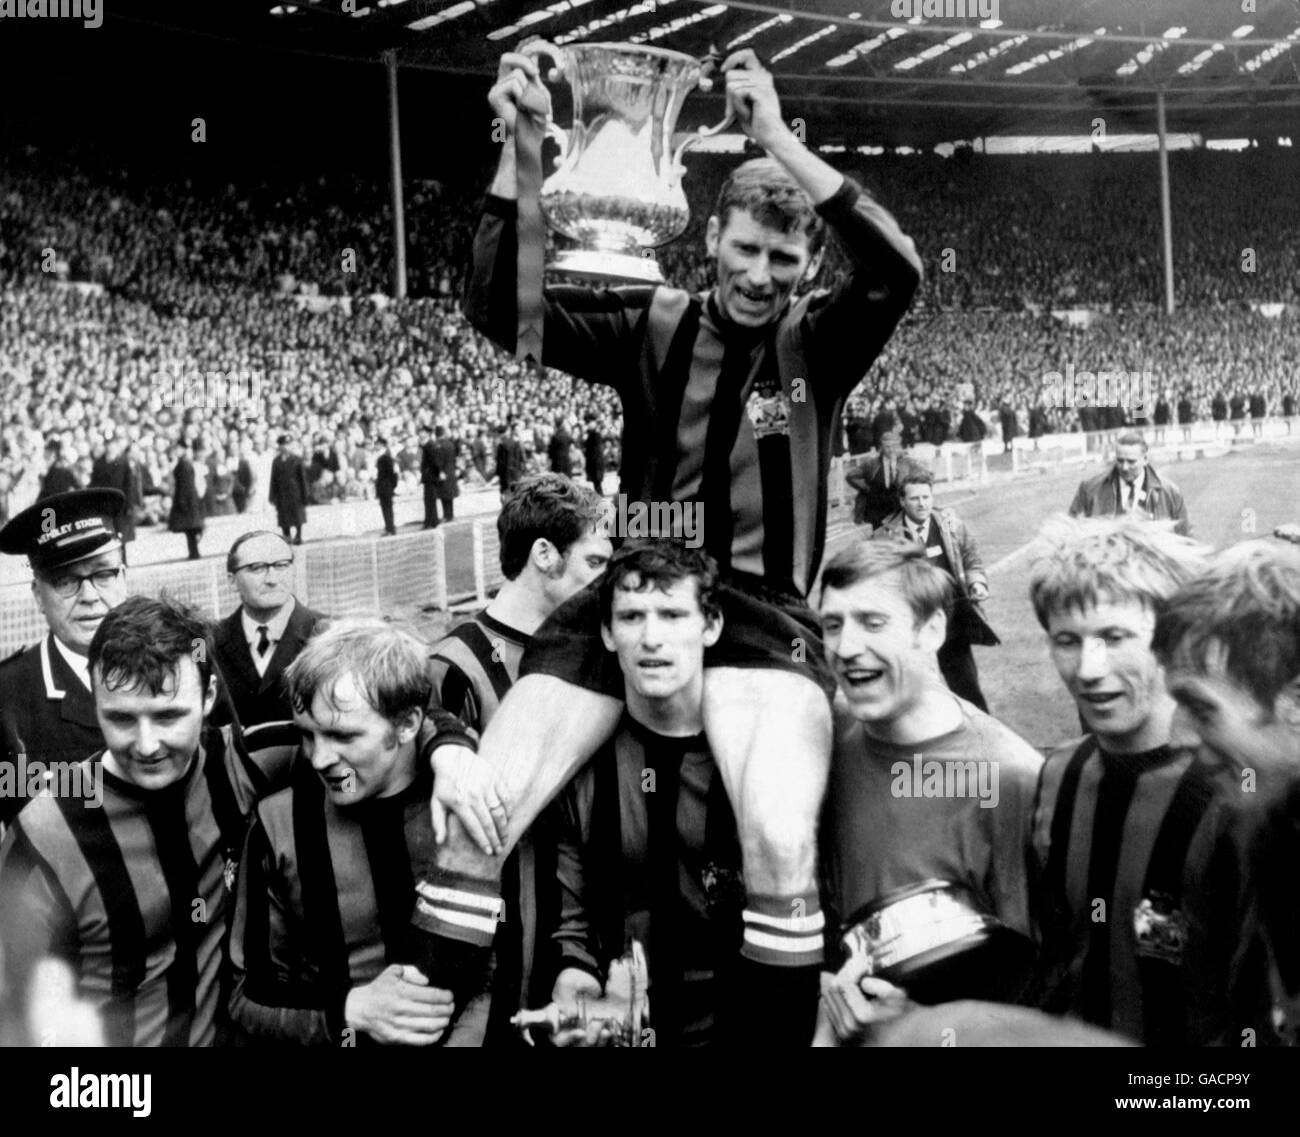 Manchester City Kapitän Tony Book hält den FA Cup hoch, während seine Teamkollegen um ihn herum feiern: (l-r) Glyn Pardoe, Francis Lee, Neil Young (halb versteckt), Mike Doyle, Torwart Harry Dowd, Colin Bell, Alan Oakes Stockfoto